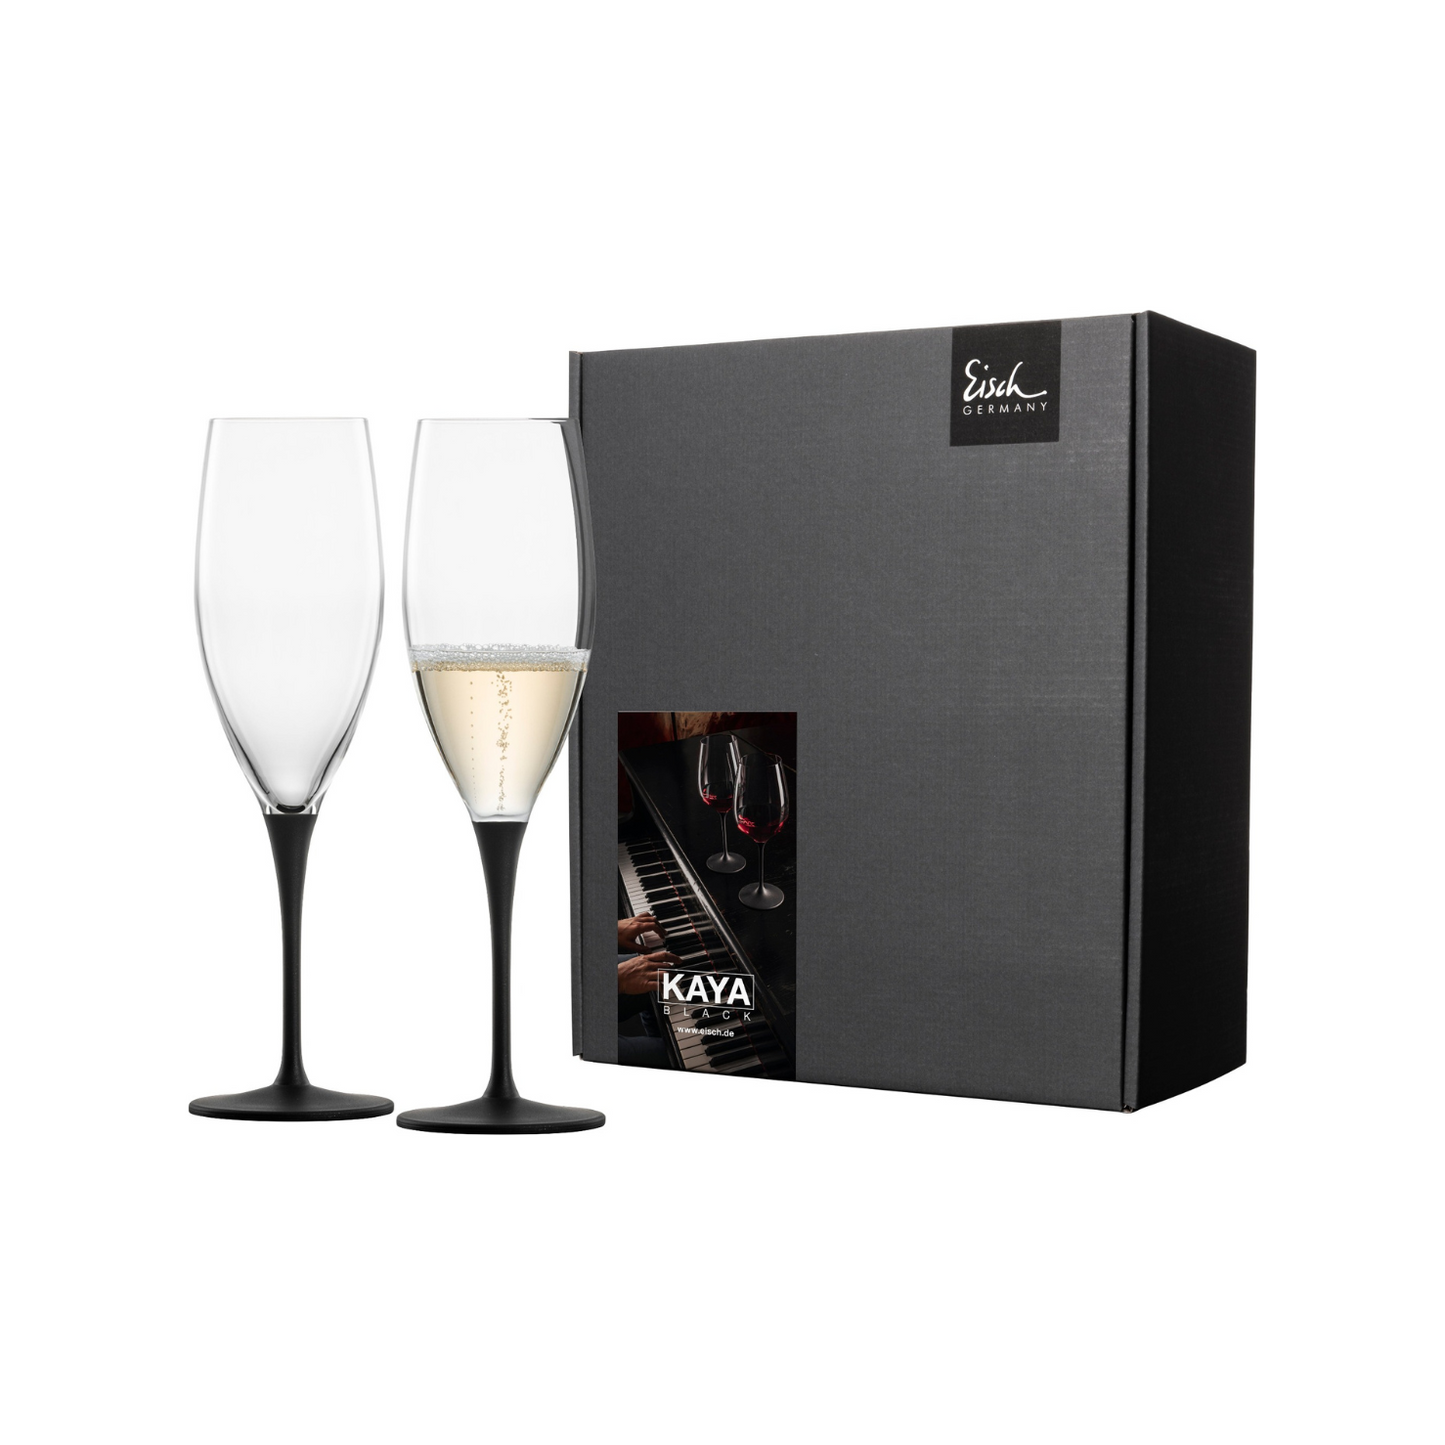 Kaya Champagne Glass, Black, Set of 2